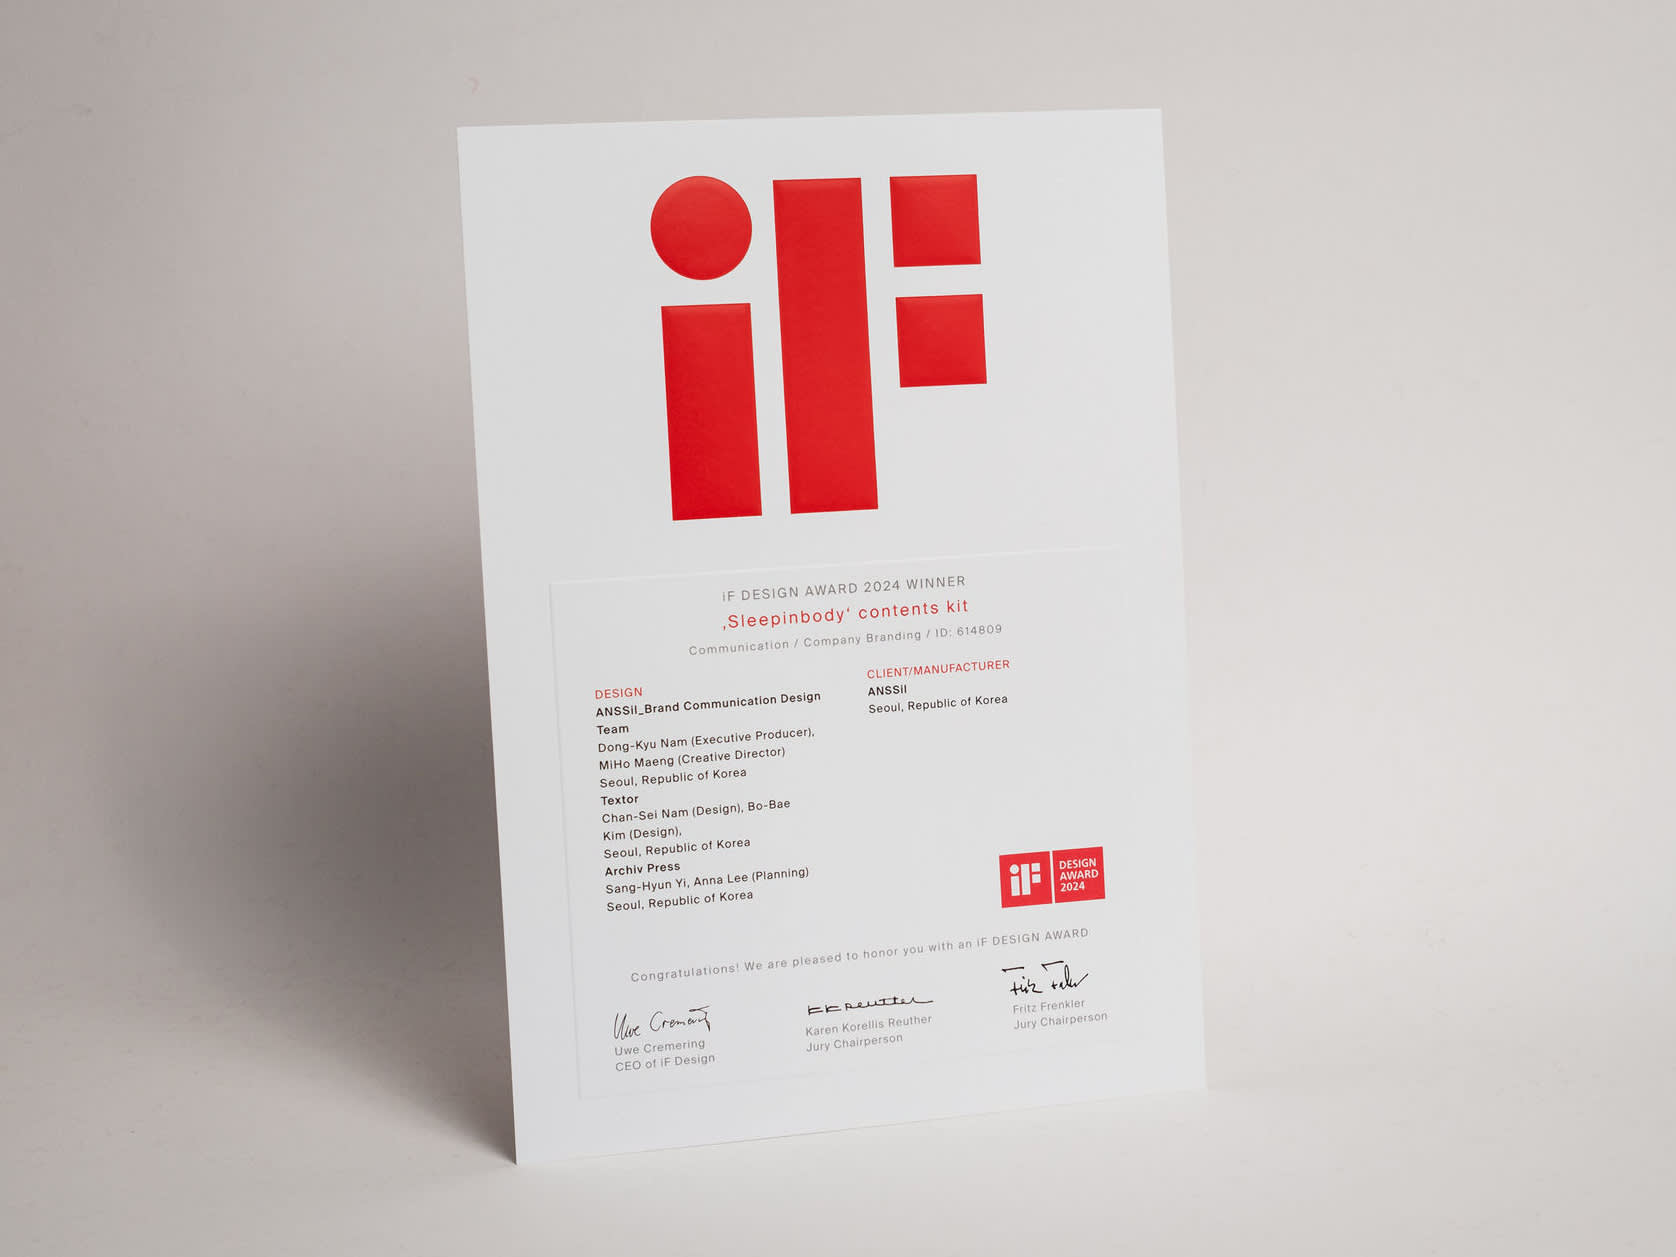 iF Design Award 2024: Printed Certificate, Paper Certificate